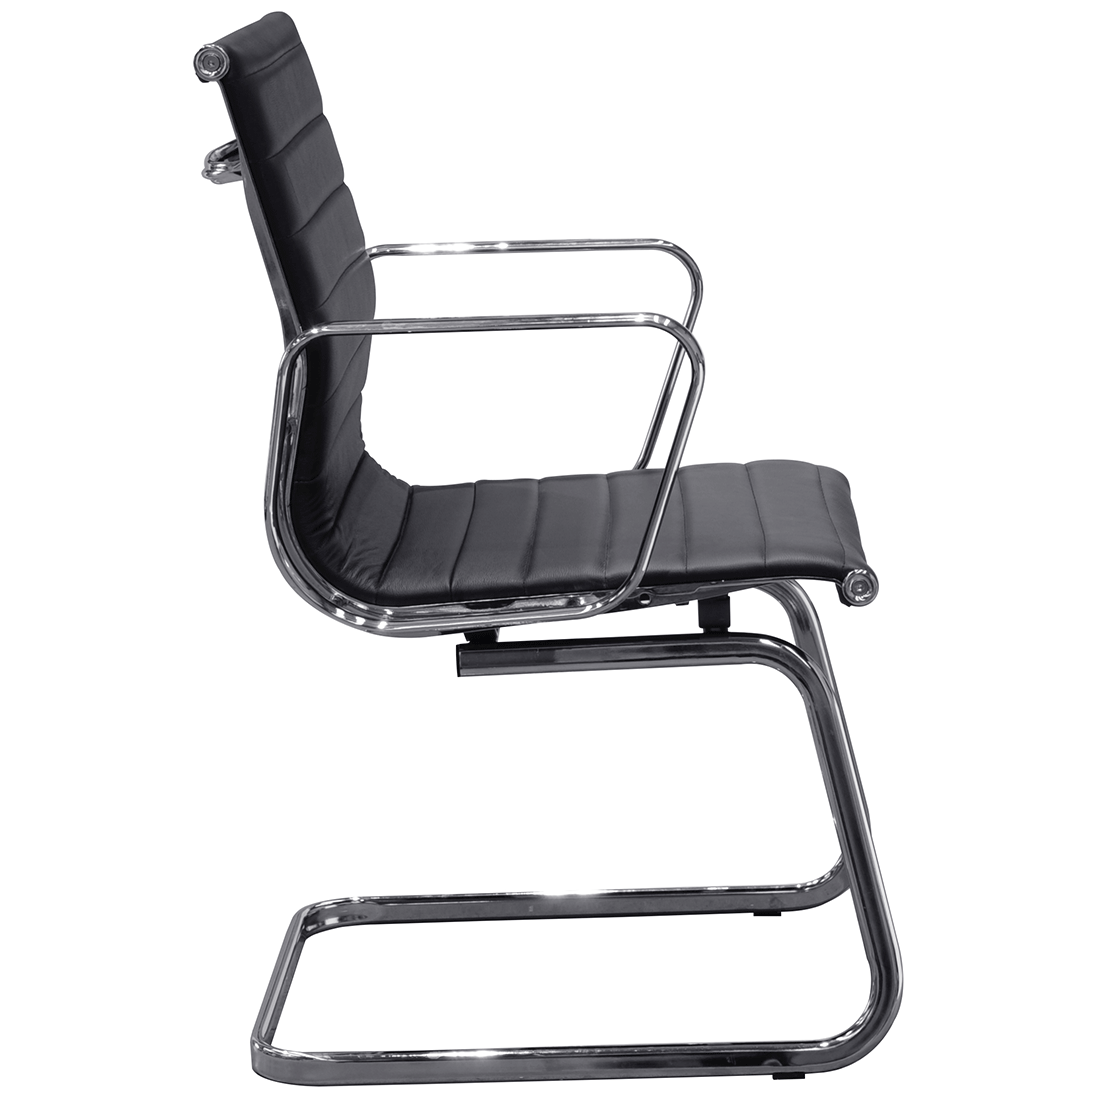 Aero Visitor Chair - switchoffice.com.au